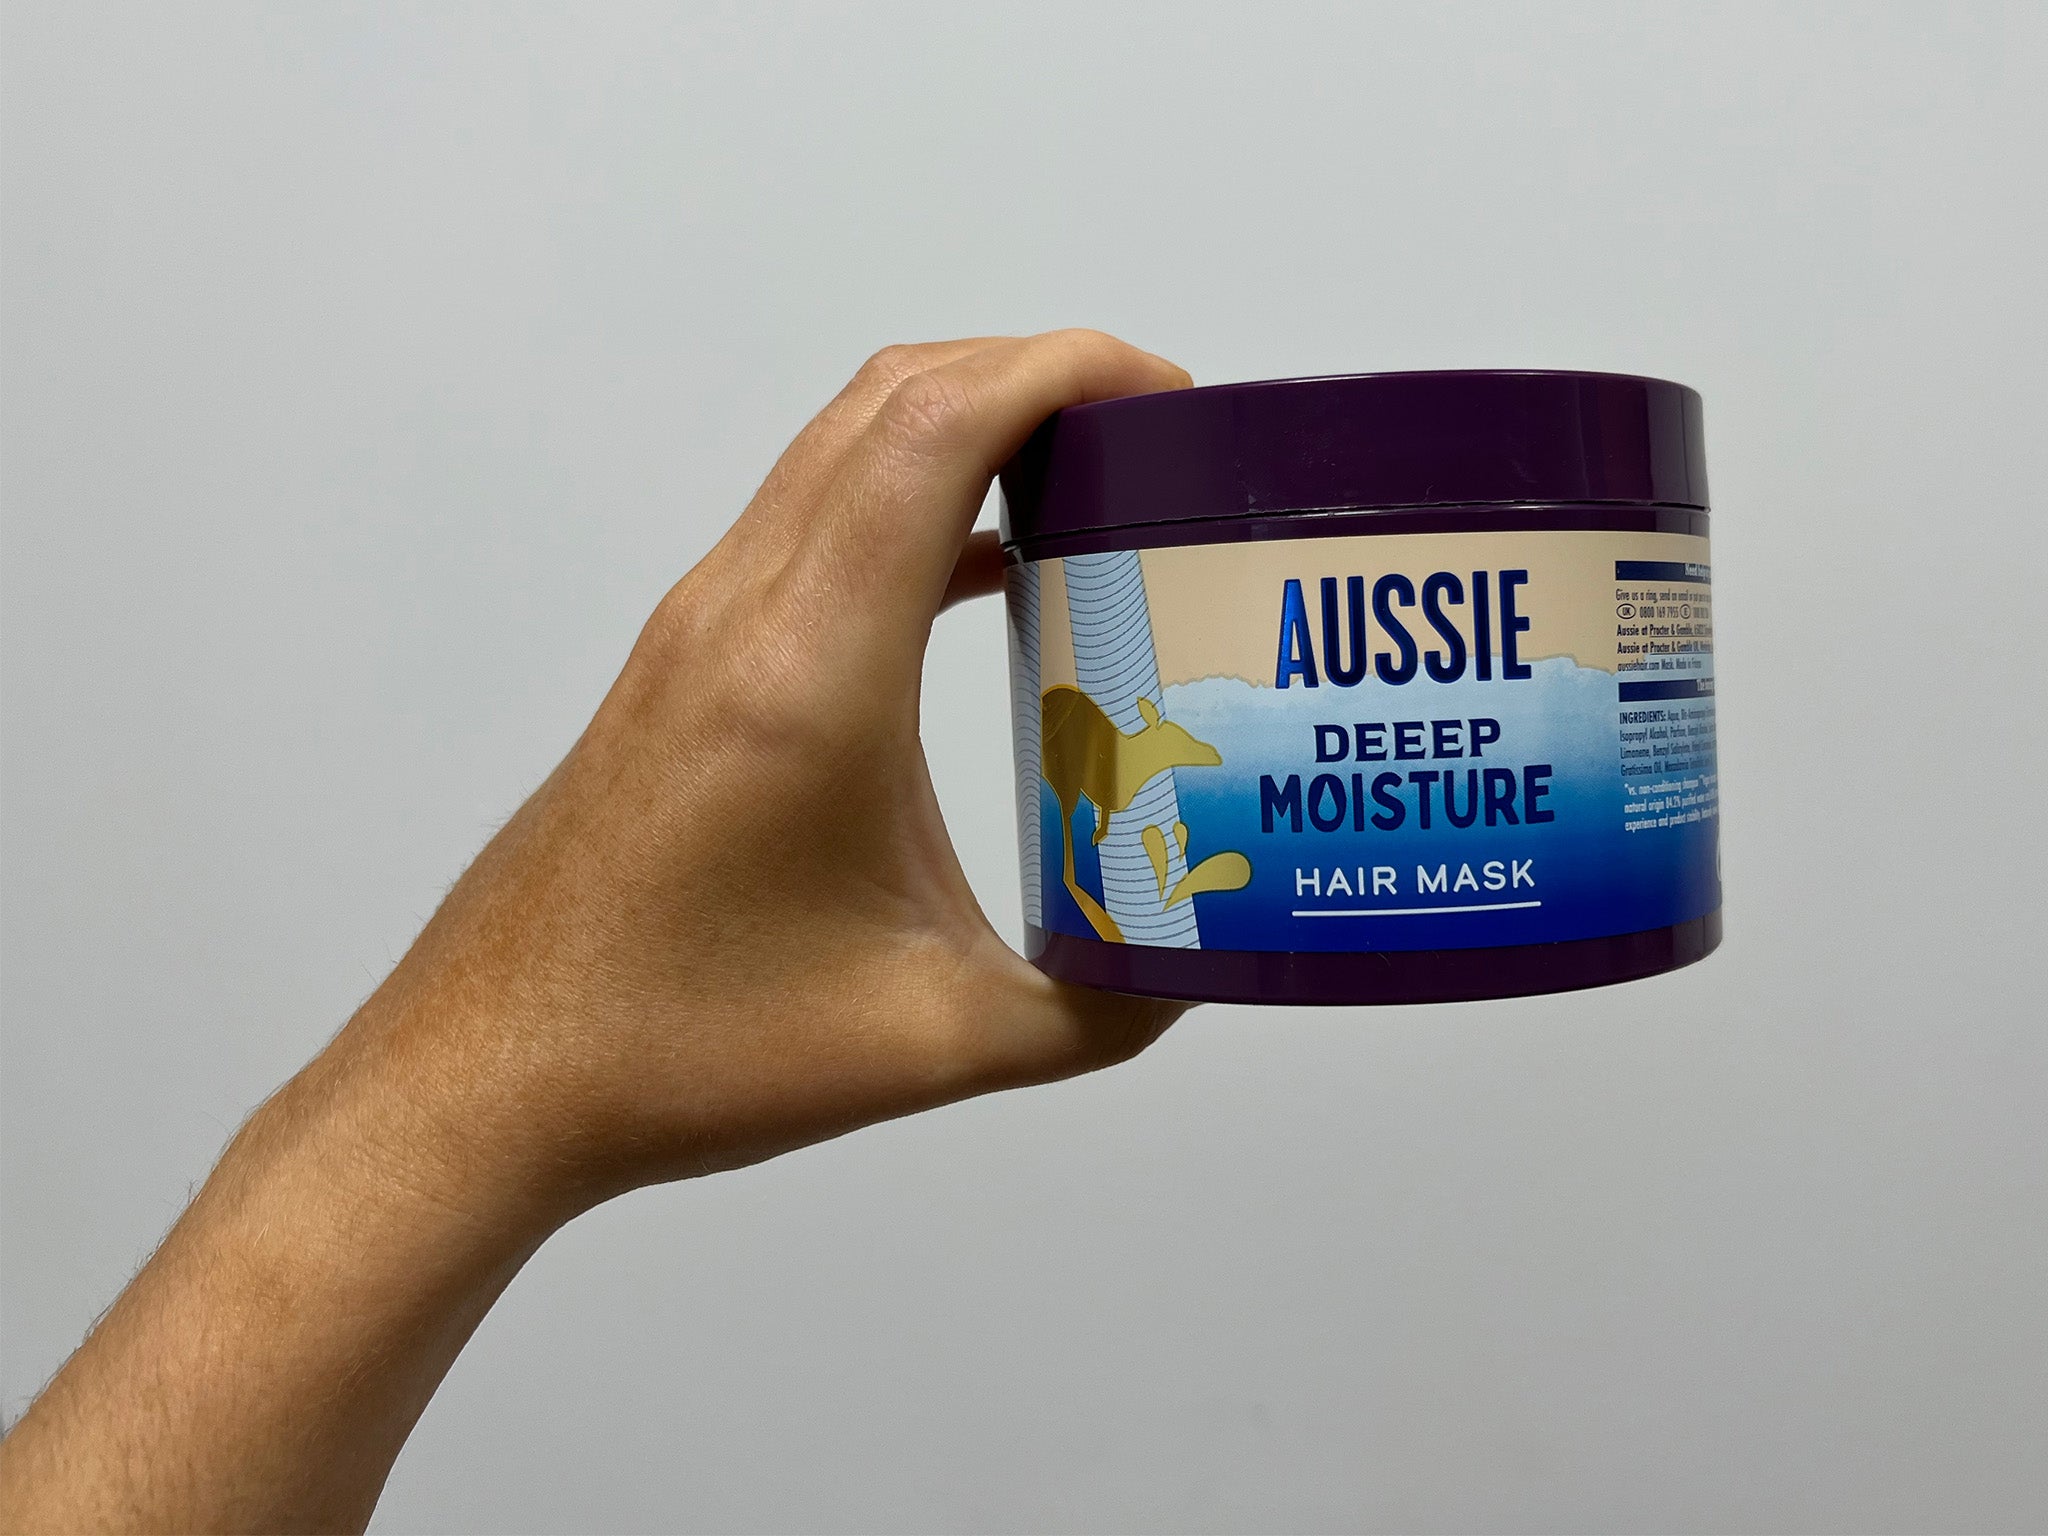 Aussie deep moisture hair mask